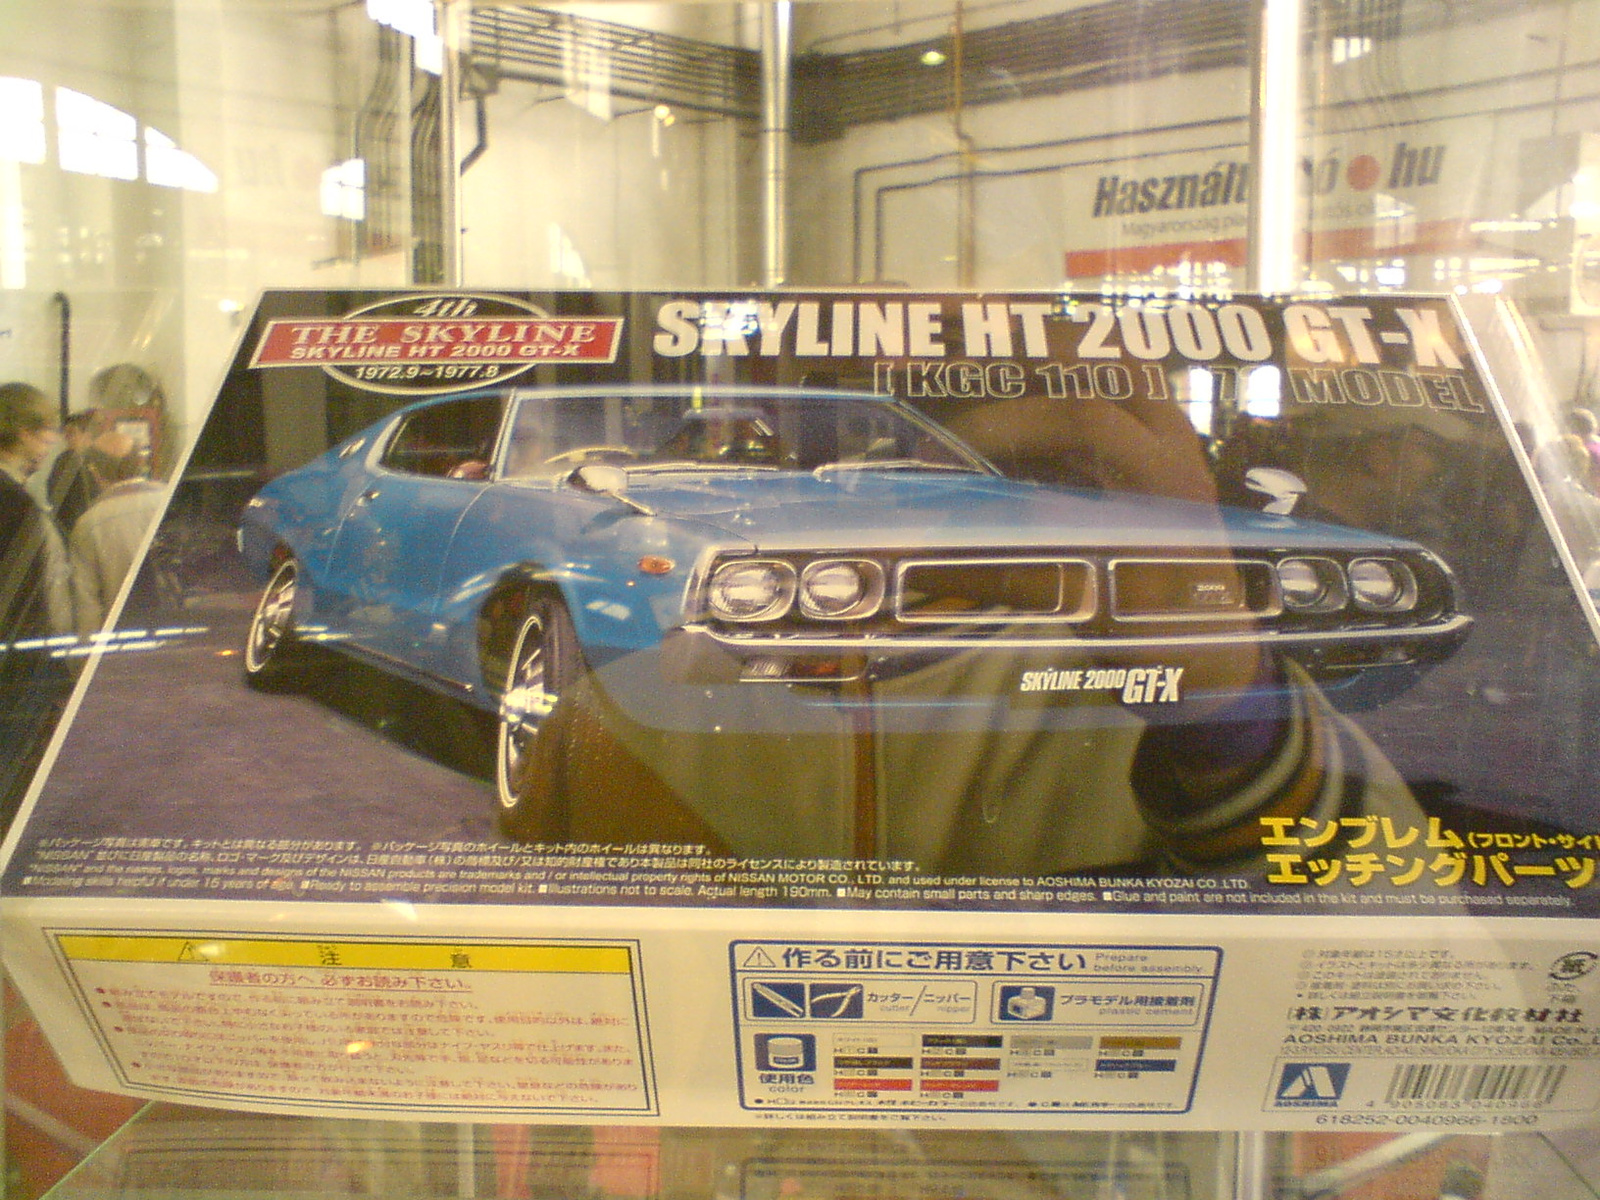 Nissan Skyline HT 2000 GT-X